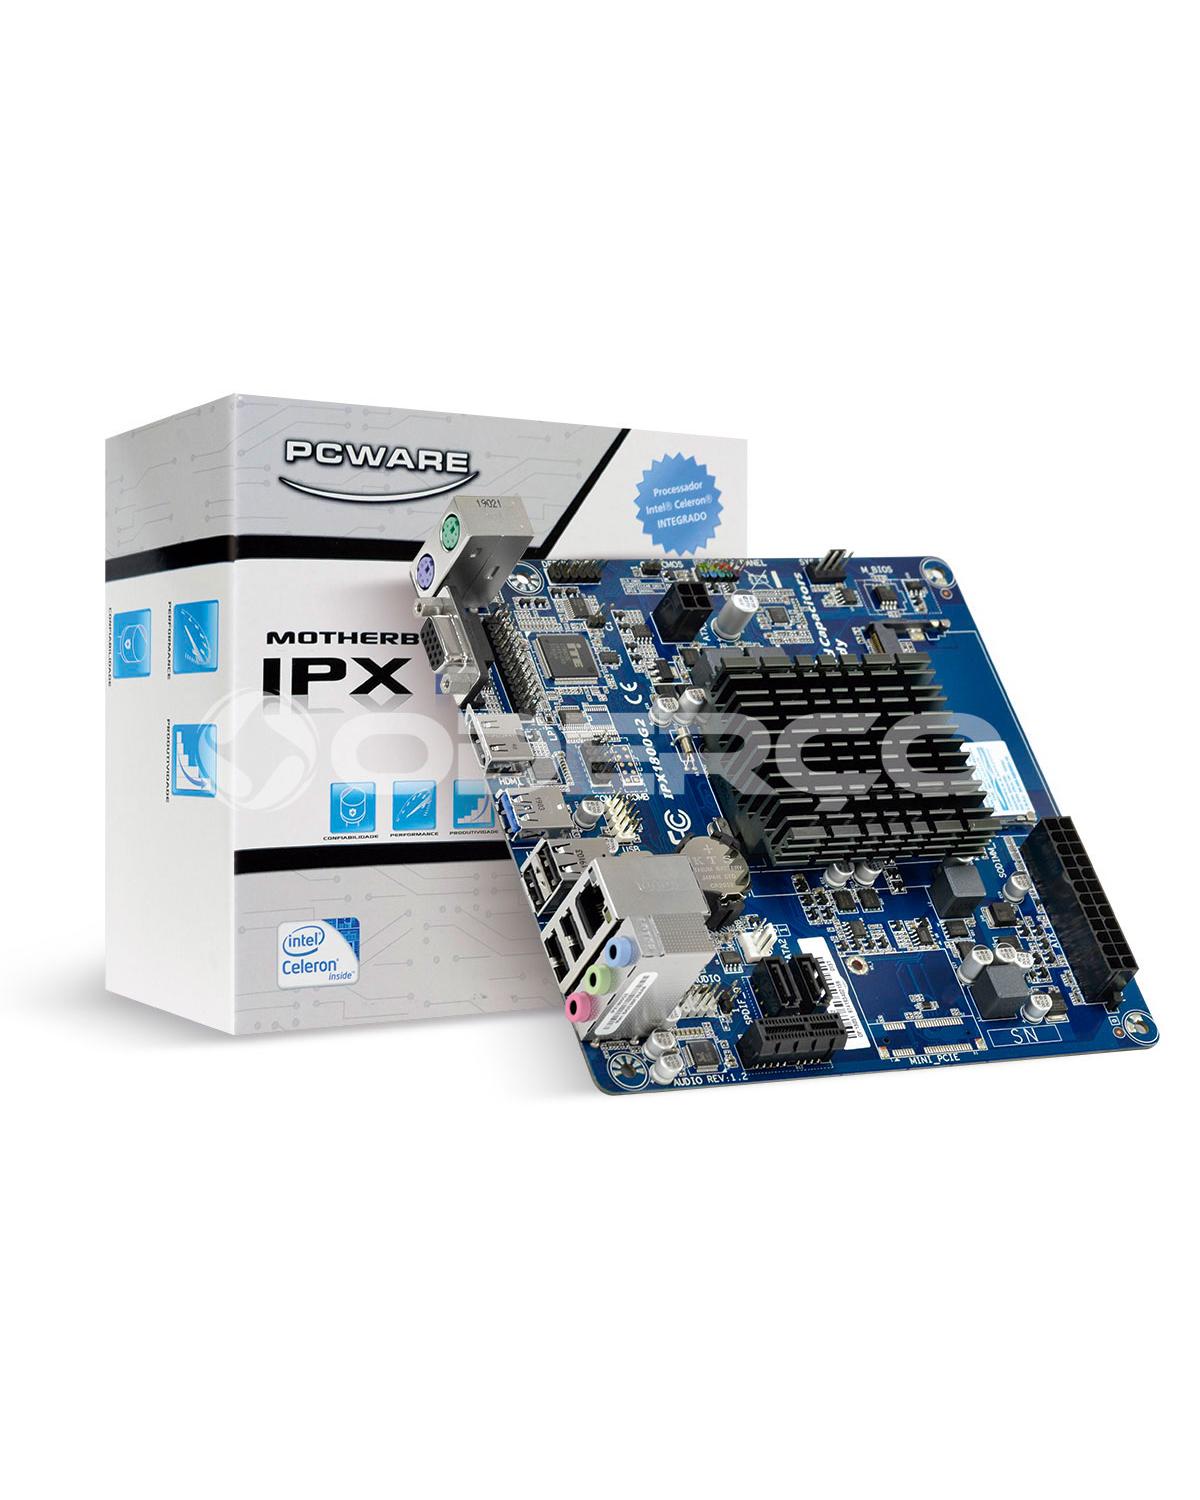 PLACA MÃE MINI-ITX IPX1800G2 COM PROCESSADOR J1800 2.41GHZ INTEGRADO DDR3 SODIMM 10/100/1000, 4USB 2.0, 1HDMI, 1 VGA